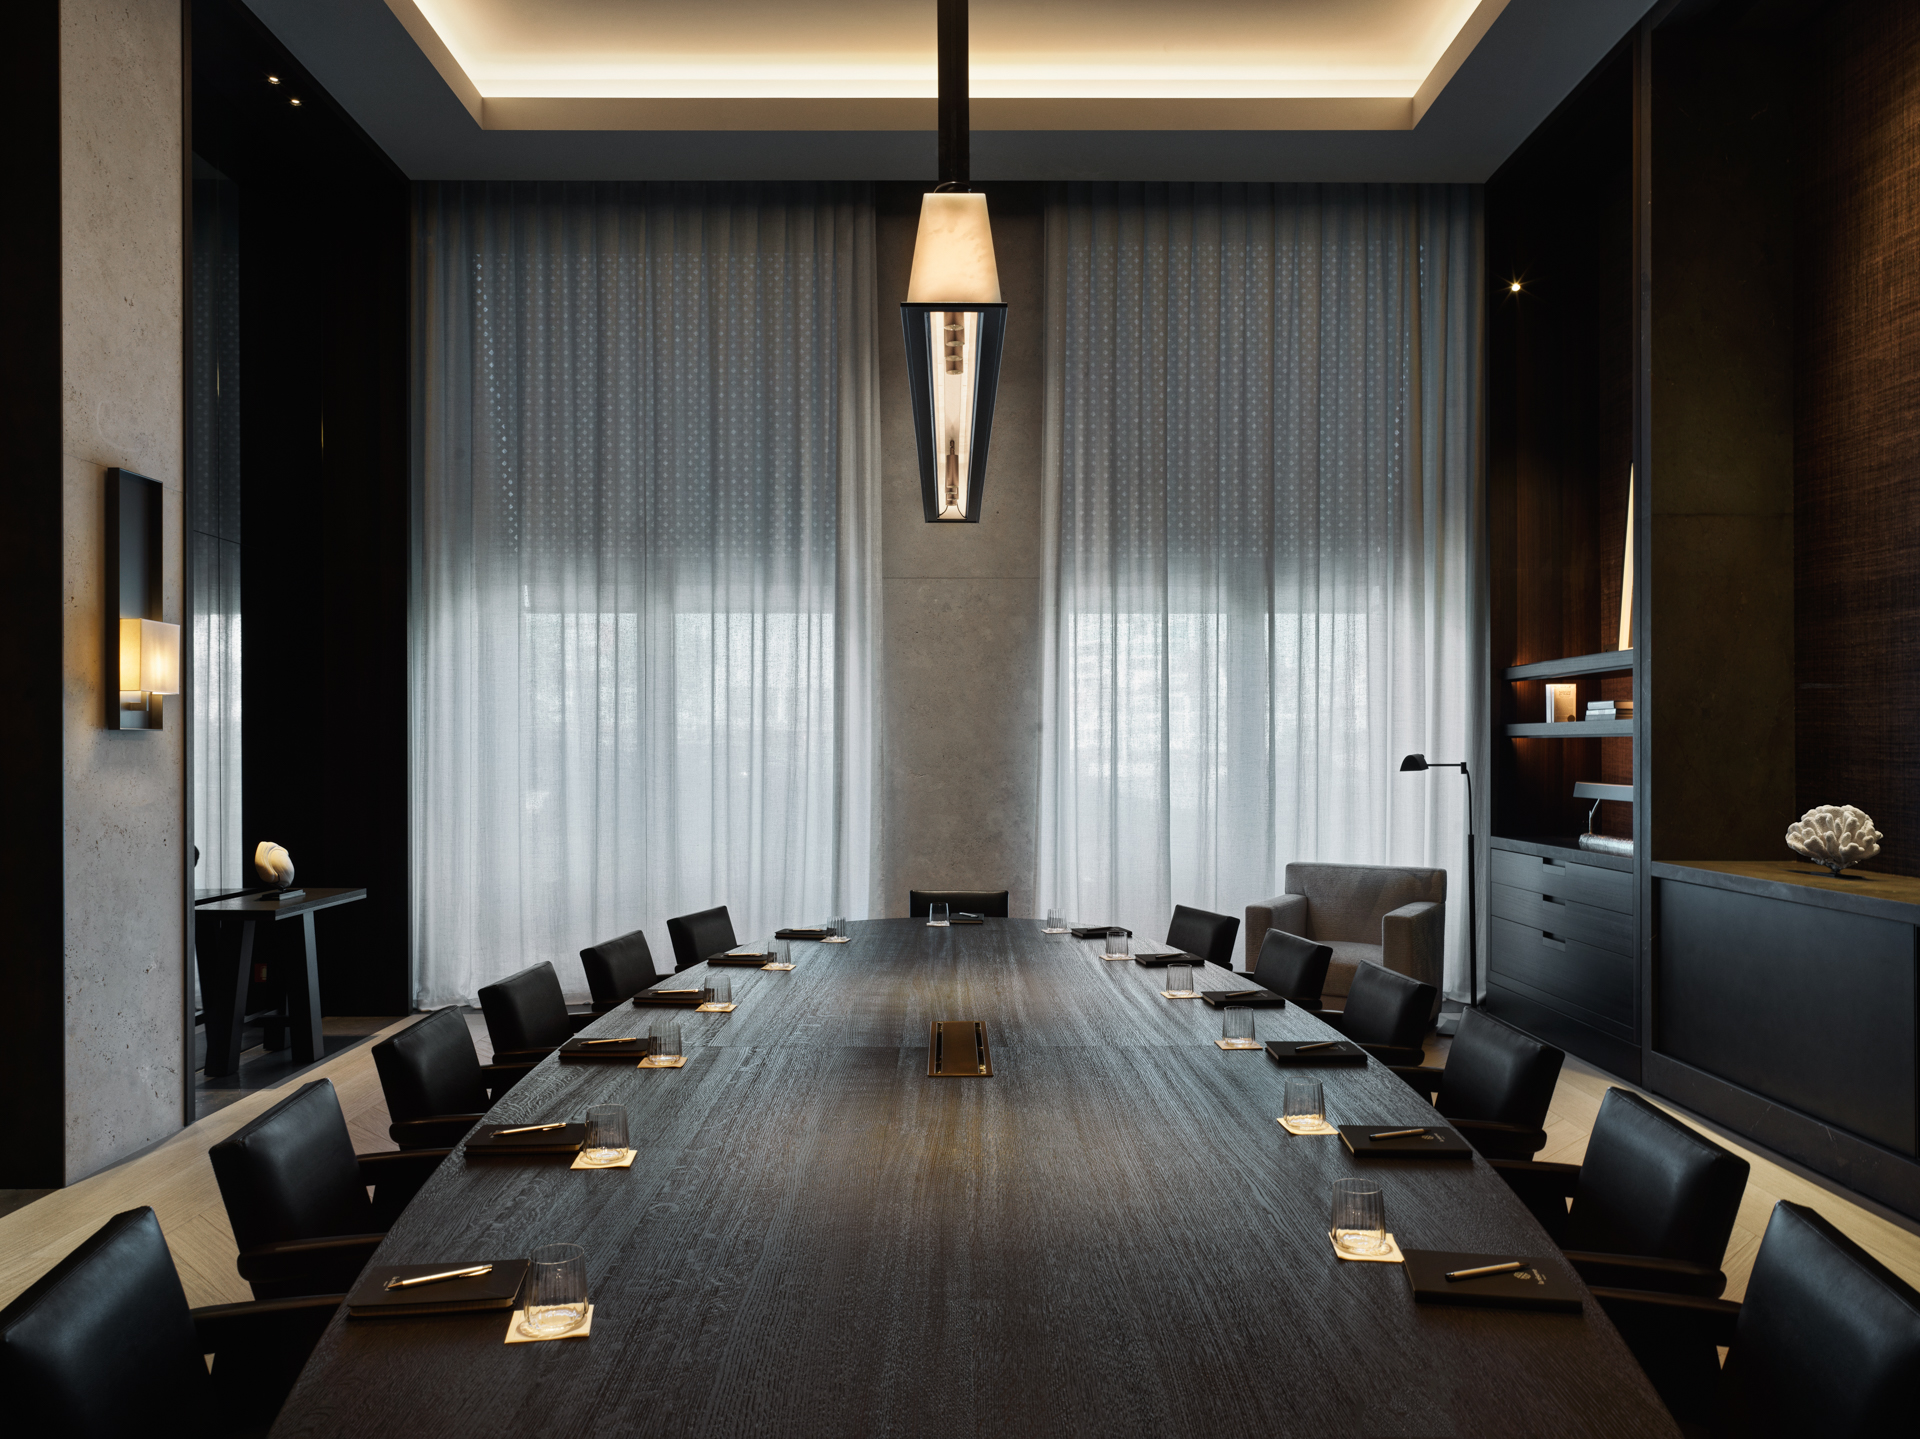 Private dining rsalon or boardroom